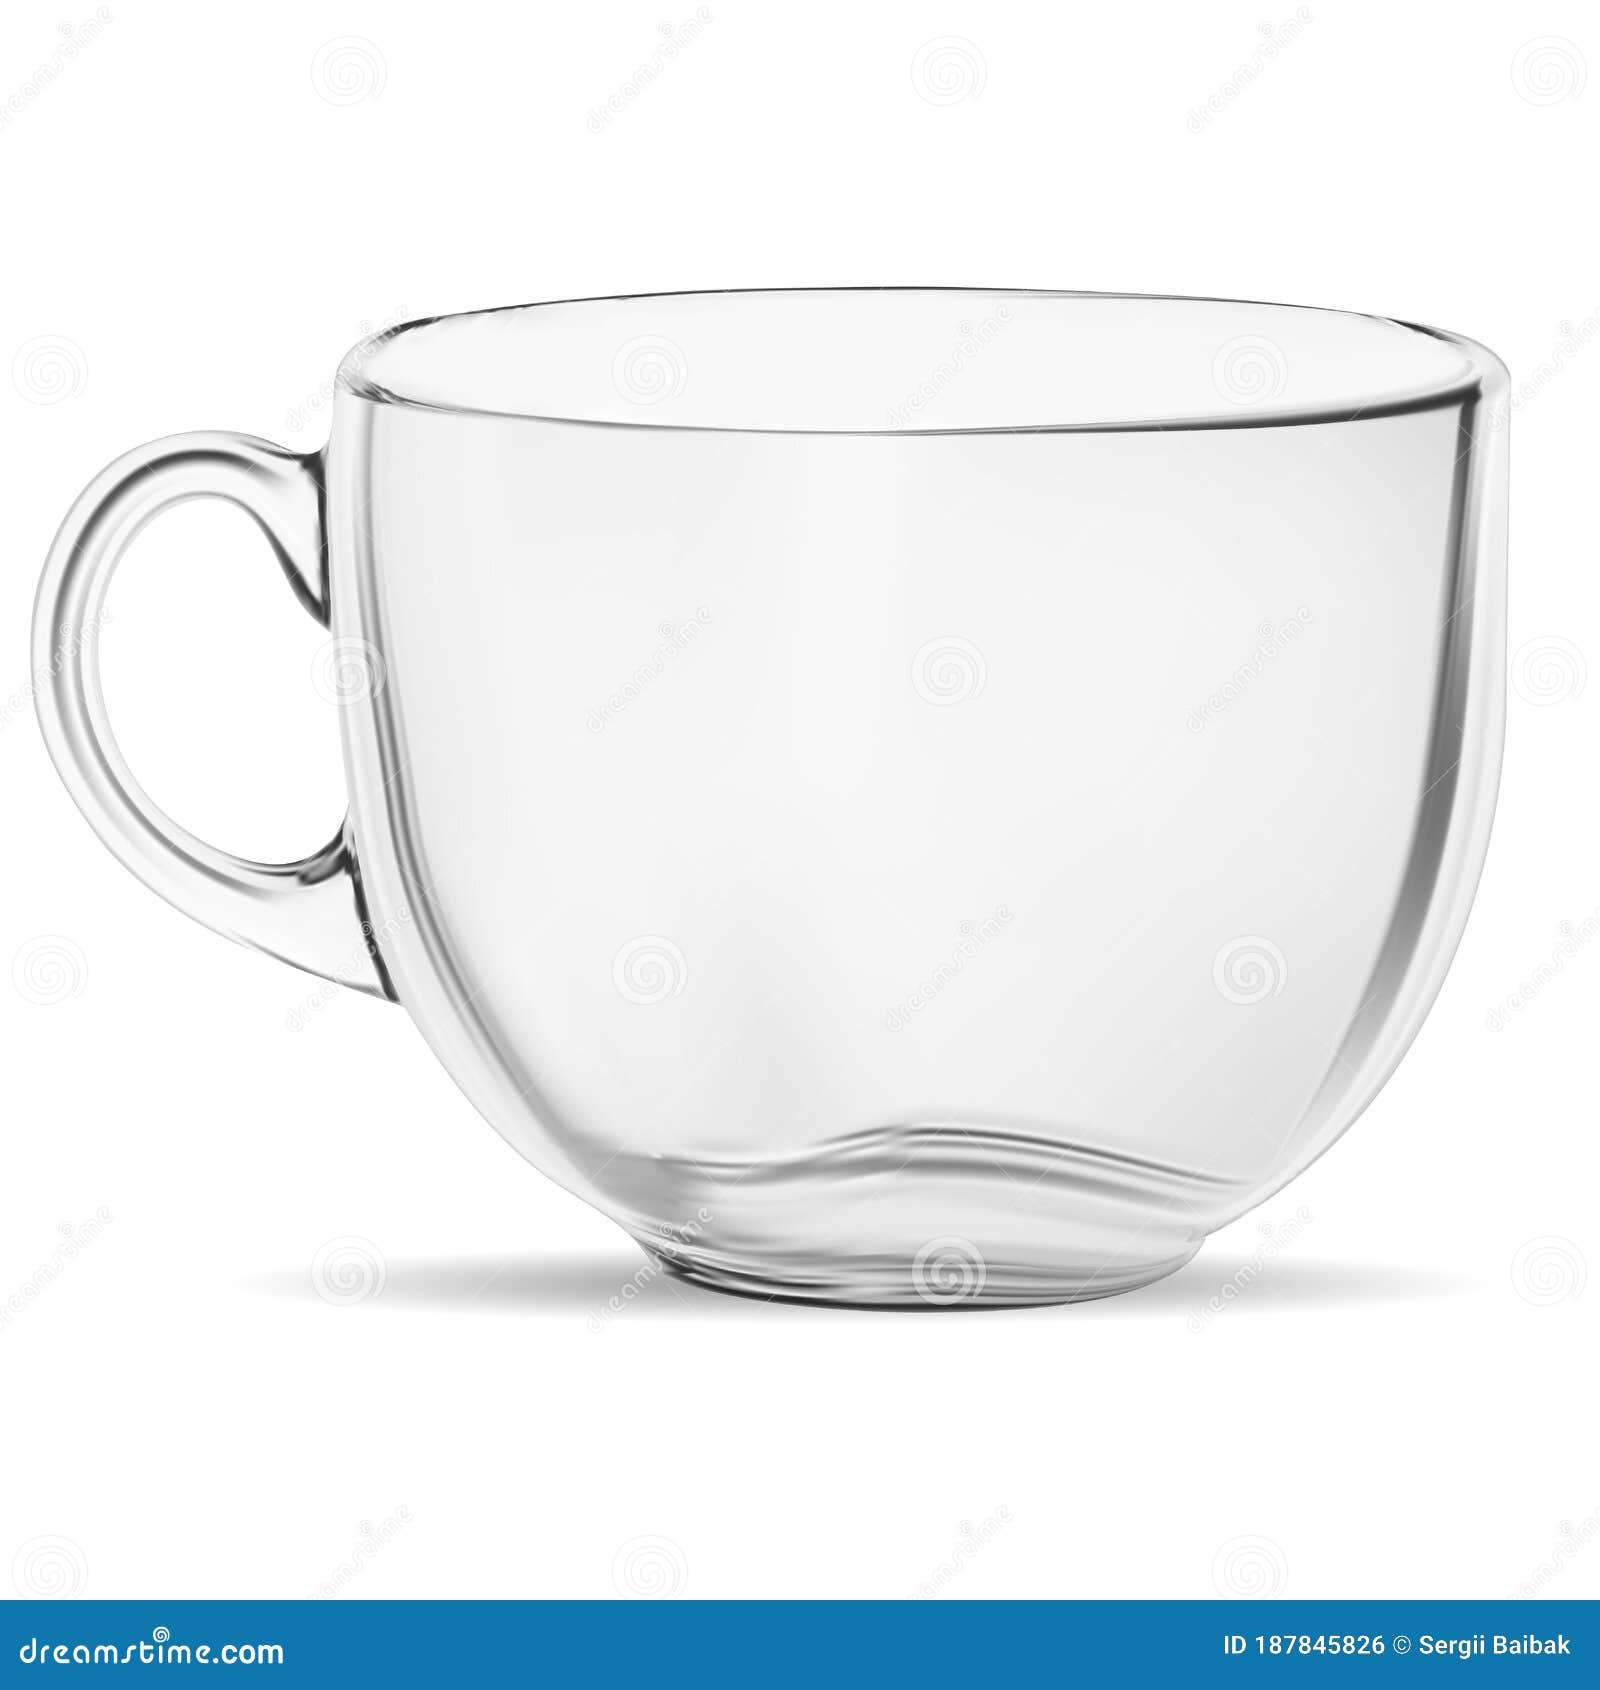 https://thumbs.dreamstime.com/z/clear-coffee-cup-mockup-transparent-tea-glass-mug-clear-coffee-cup-mockup-transparent-tea-glass-mug-isolate-d-realistic-crystal-187845826.jpg